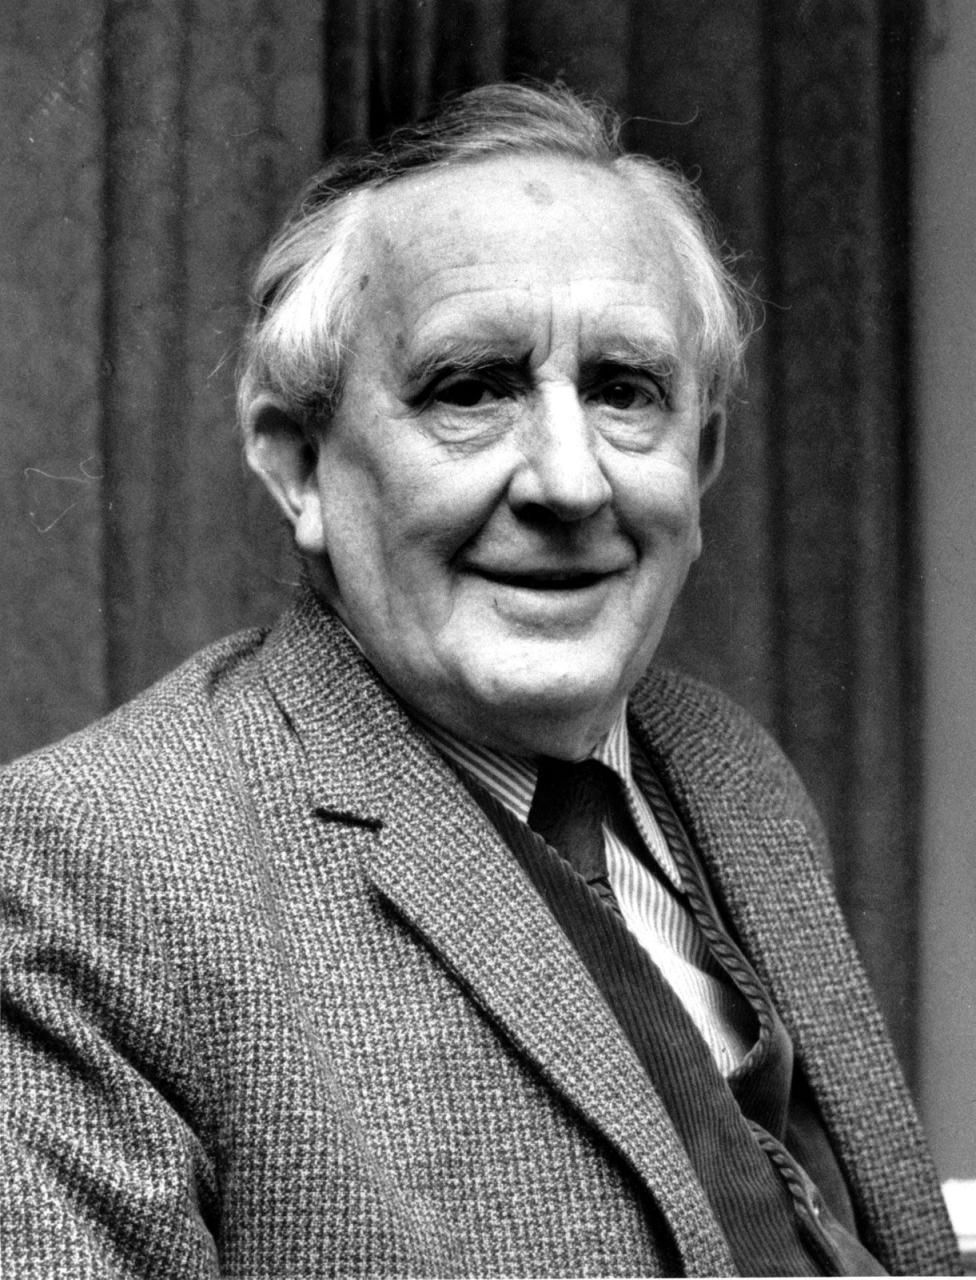 J.R.R. Tolkien | Biography, Books, Movies, & Facts | Britannica